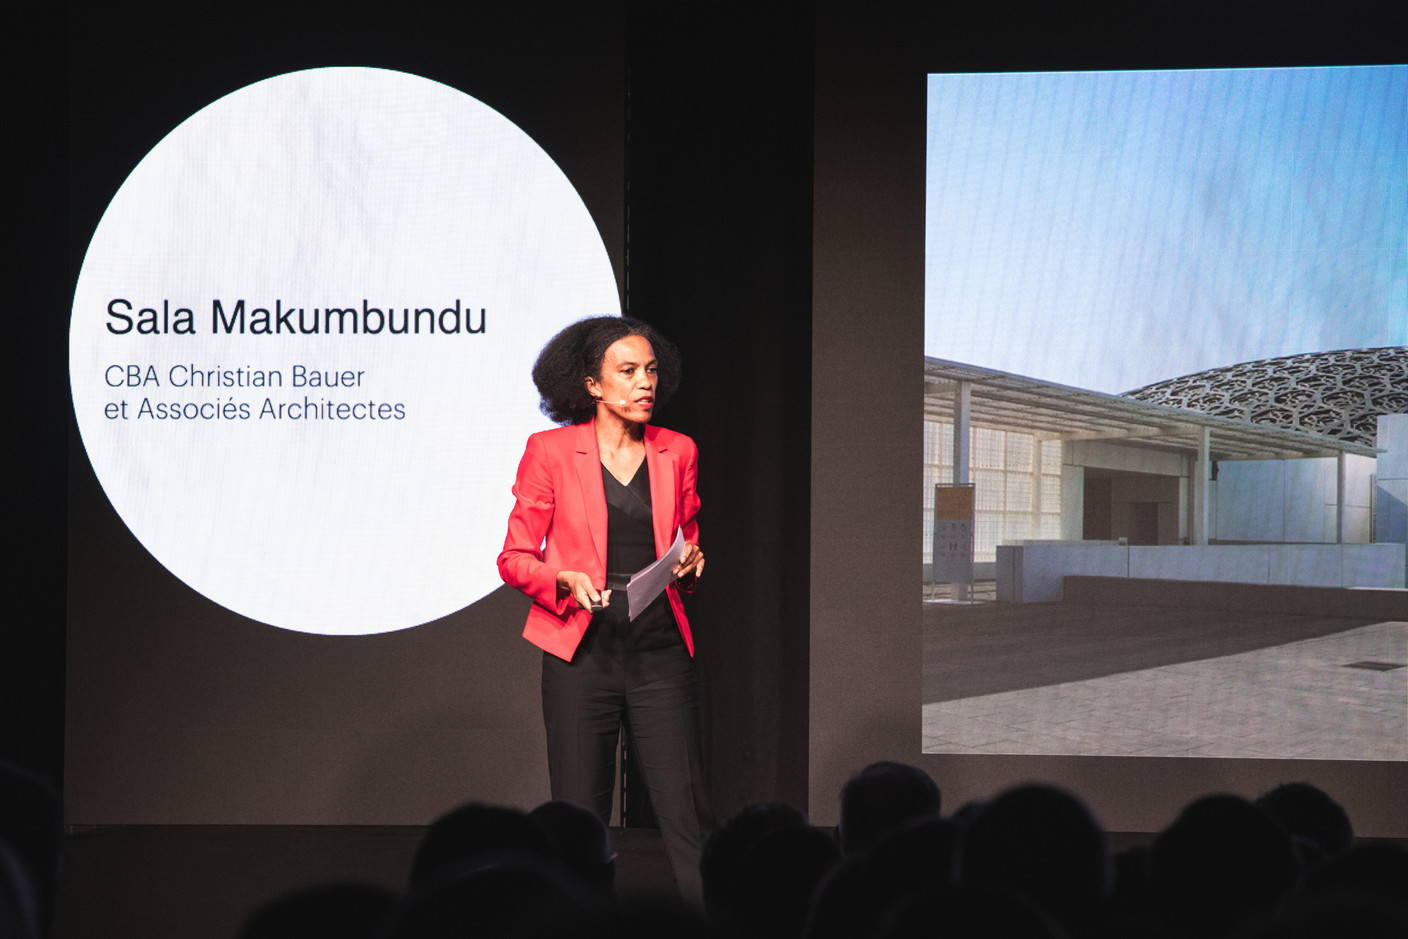 Sala Makumbundu (CBA Christian Bauer et Associés Architectes) (Photo: Eva Krins/Maison Moderne)